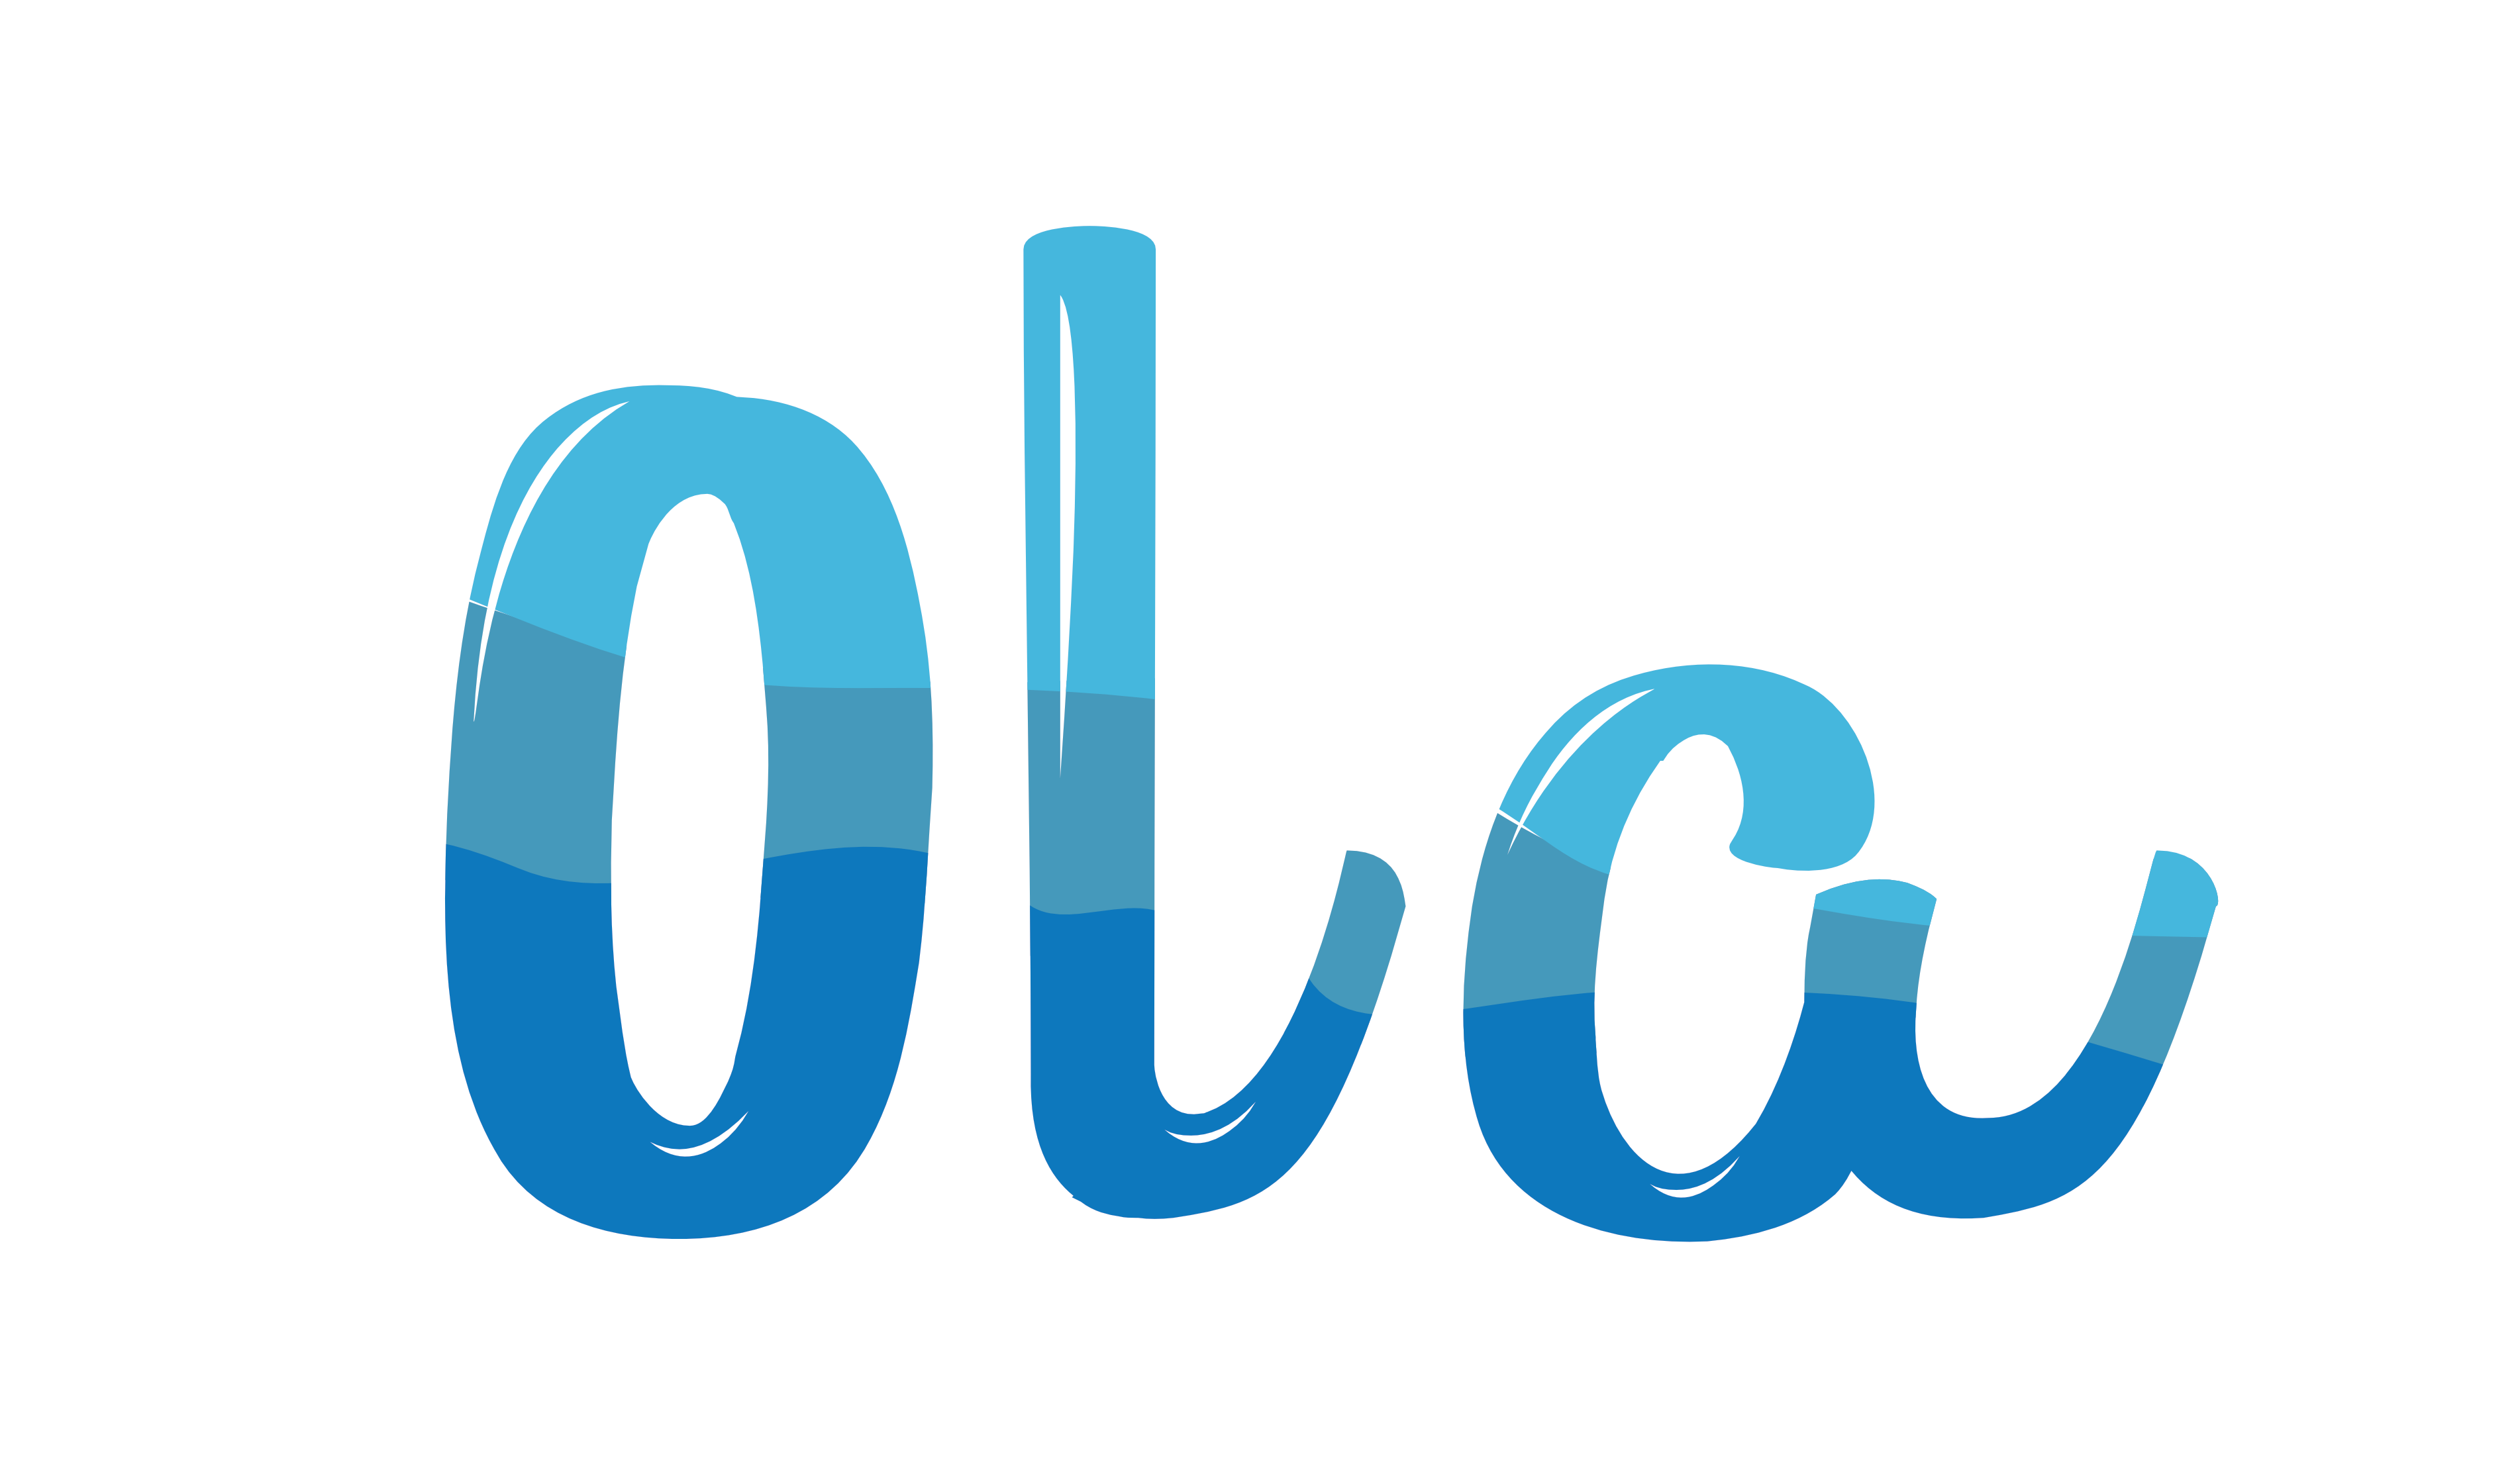 Ola Logo